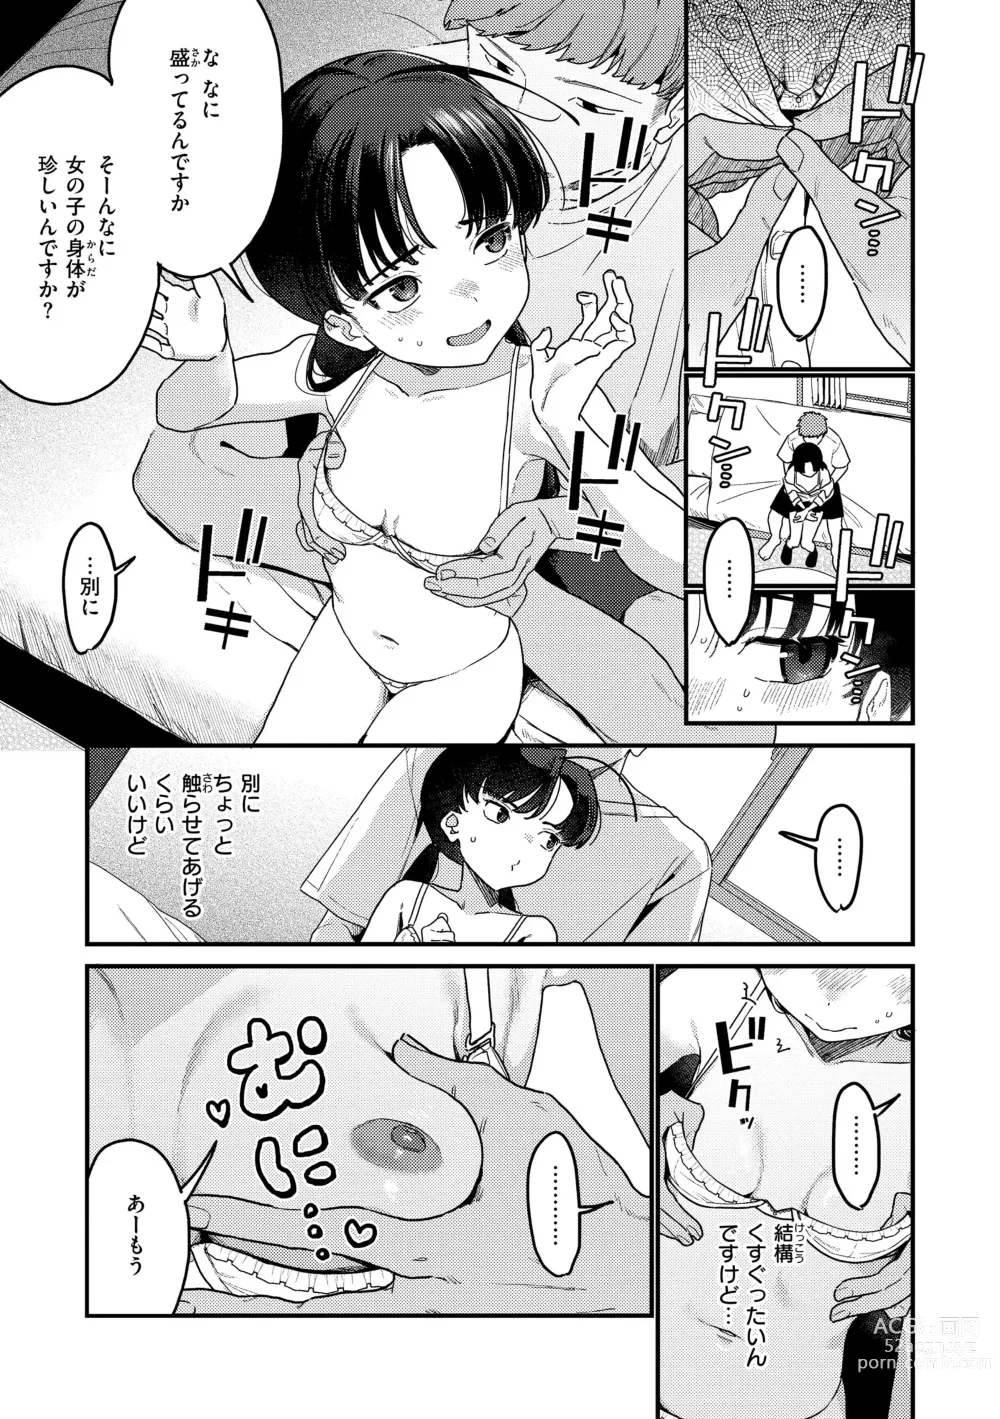 Page 17 of manga Wakarasete. - Show me reality.